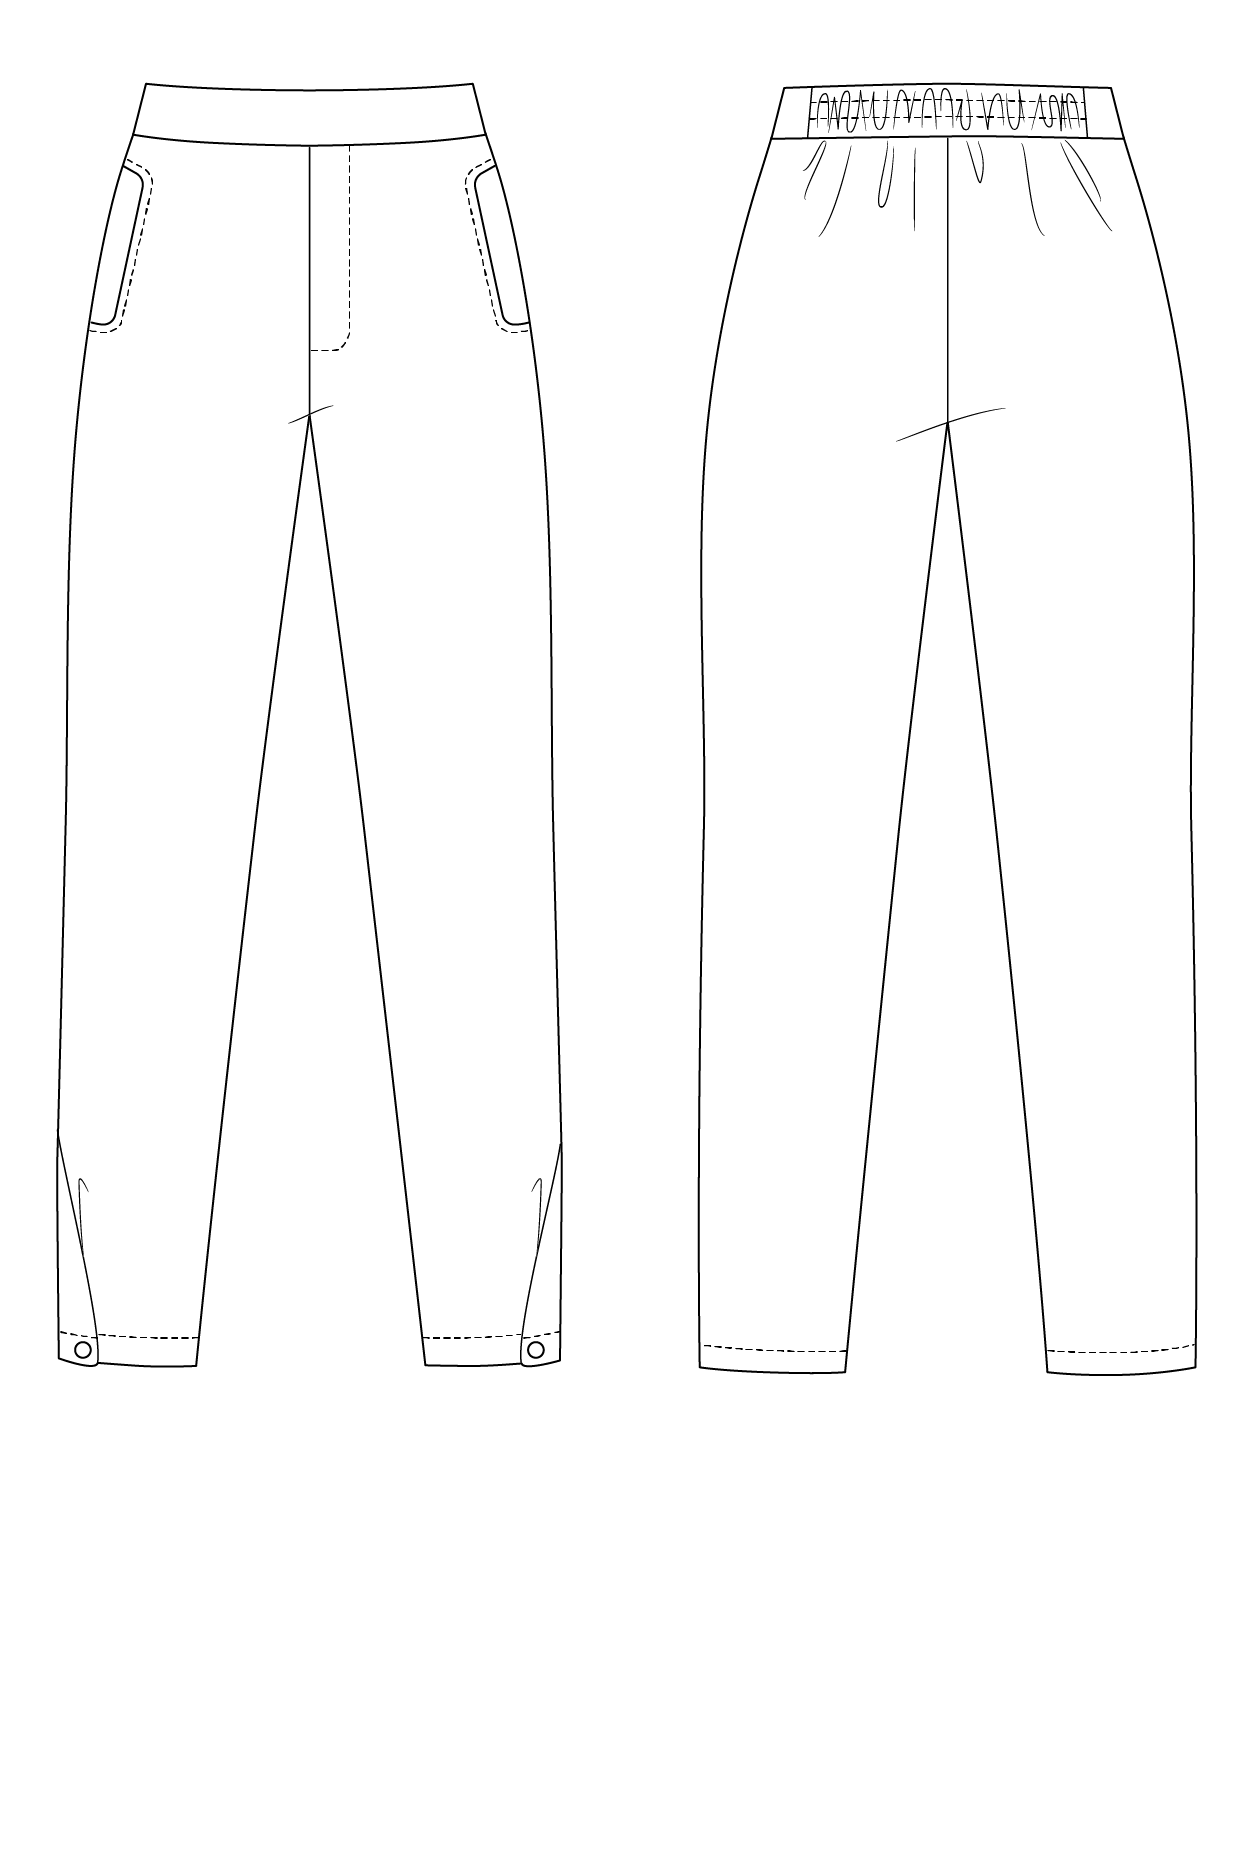 Ruri Sweatpants Sewing Pattern | Named Clothing